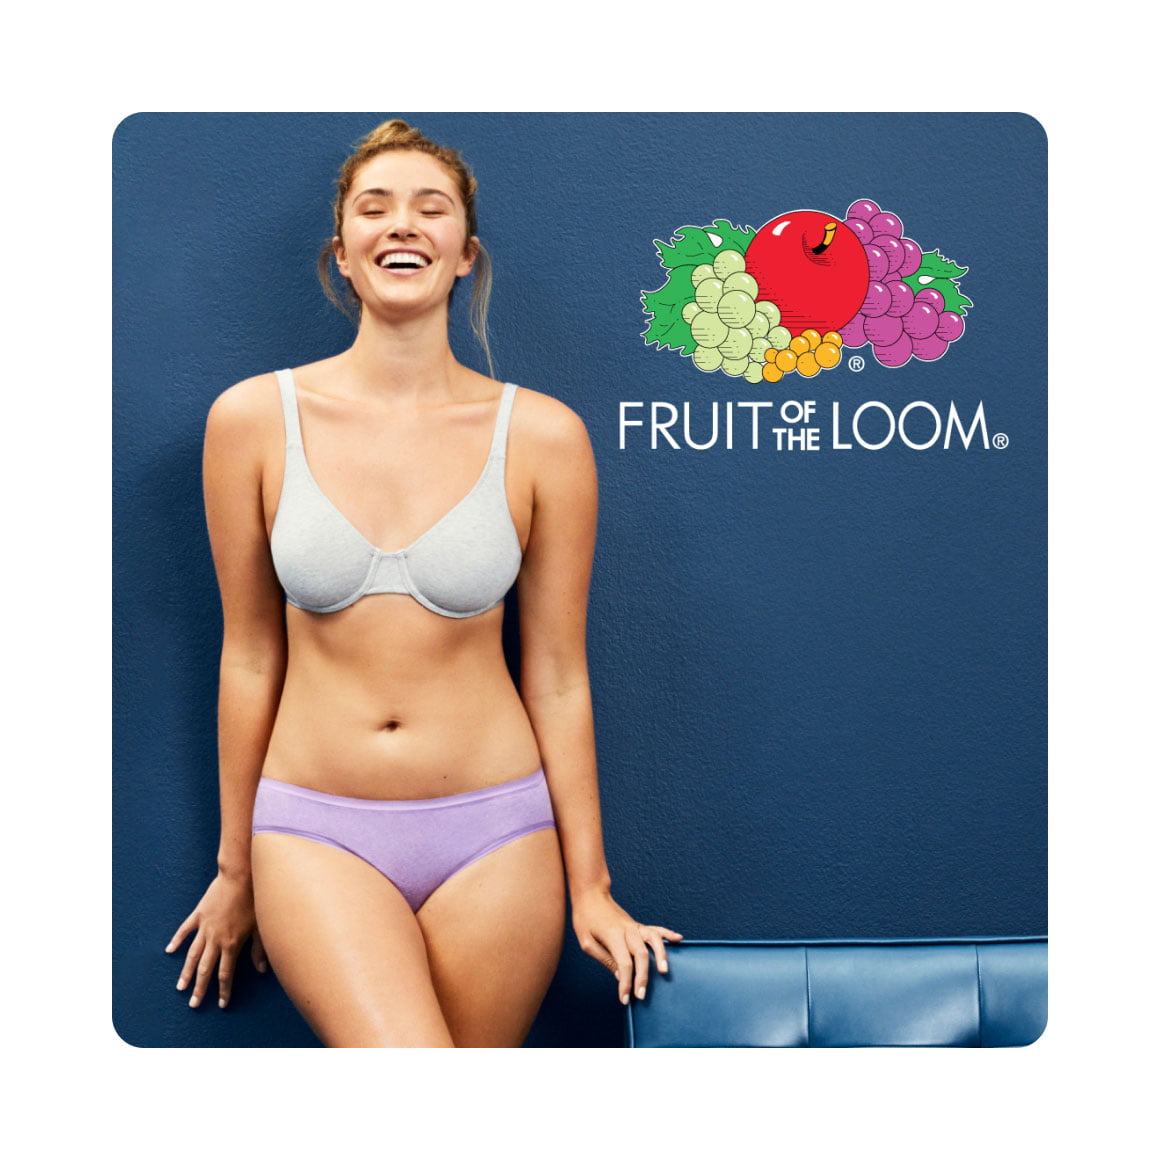 Customer SLAMS Walmart for placing panties, bras next to men's section